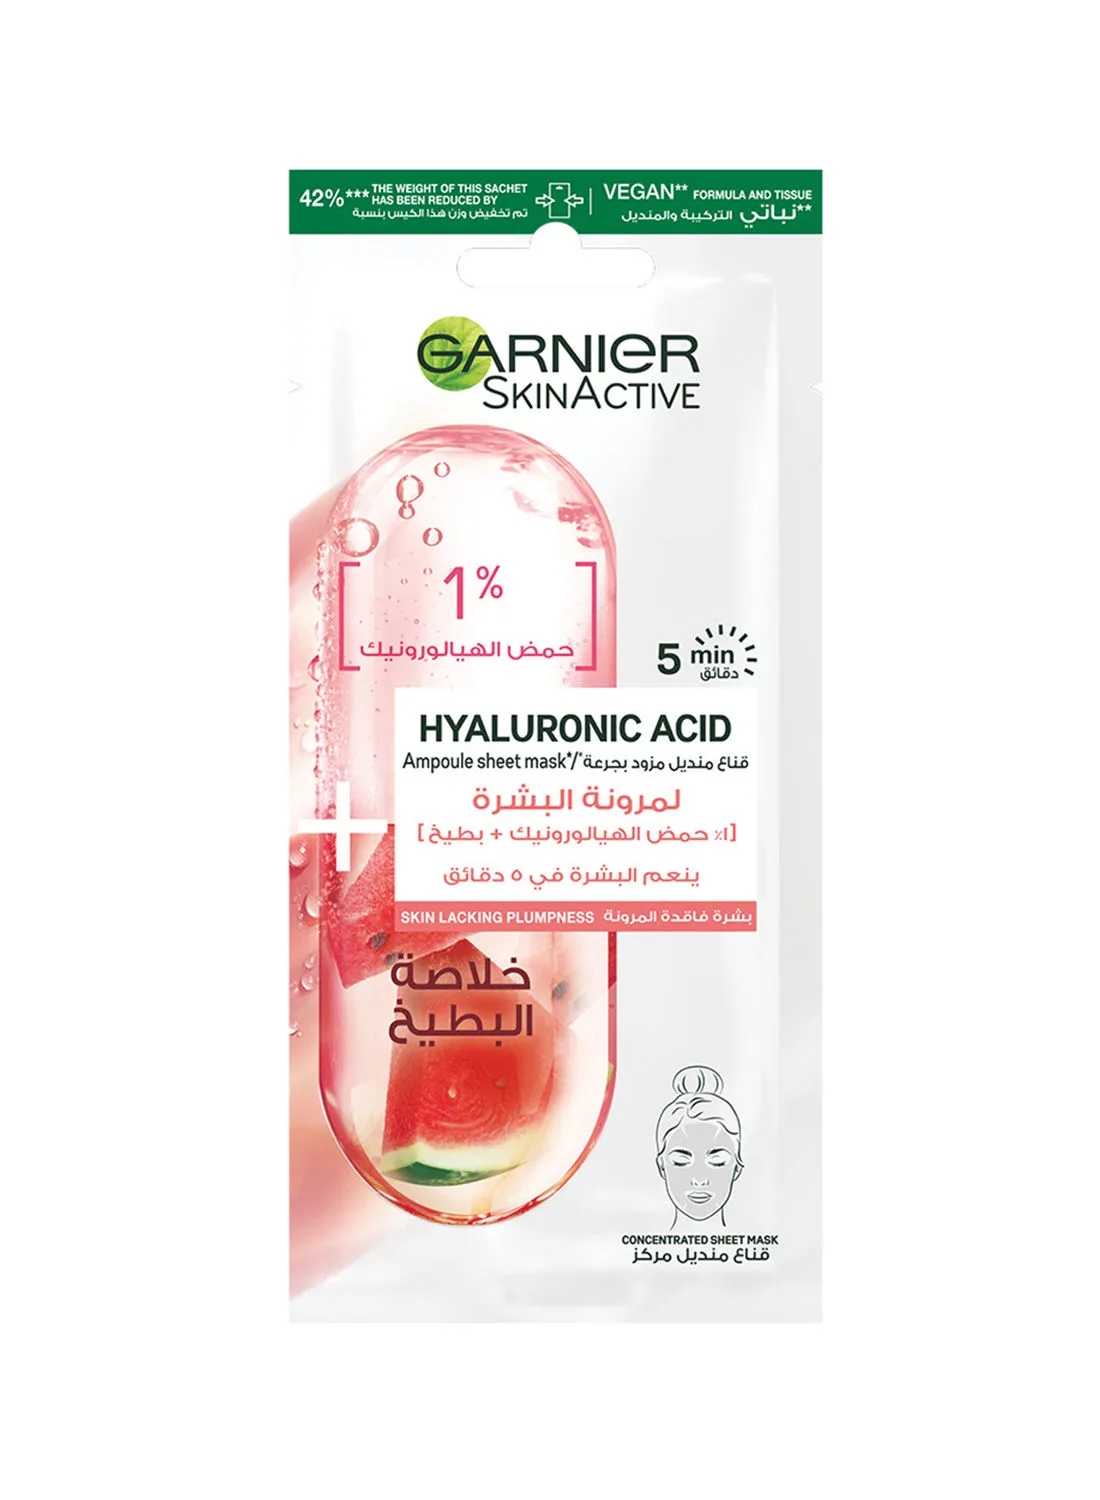 GARNIER Skinactive Sheet Mask Ampoule 1% Hyaluronic Acid X Watermelon 15g